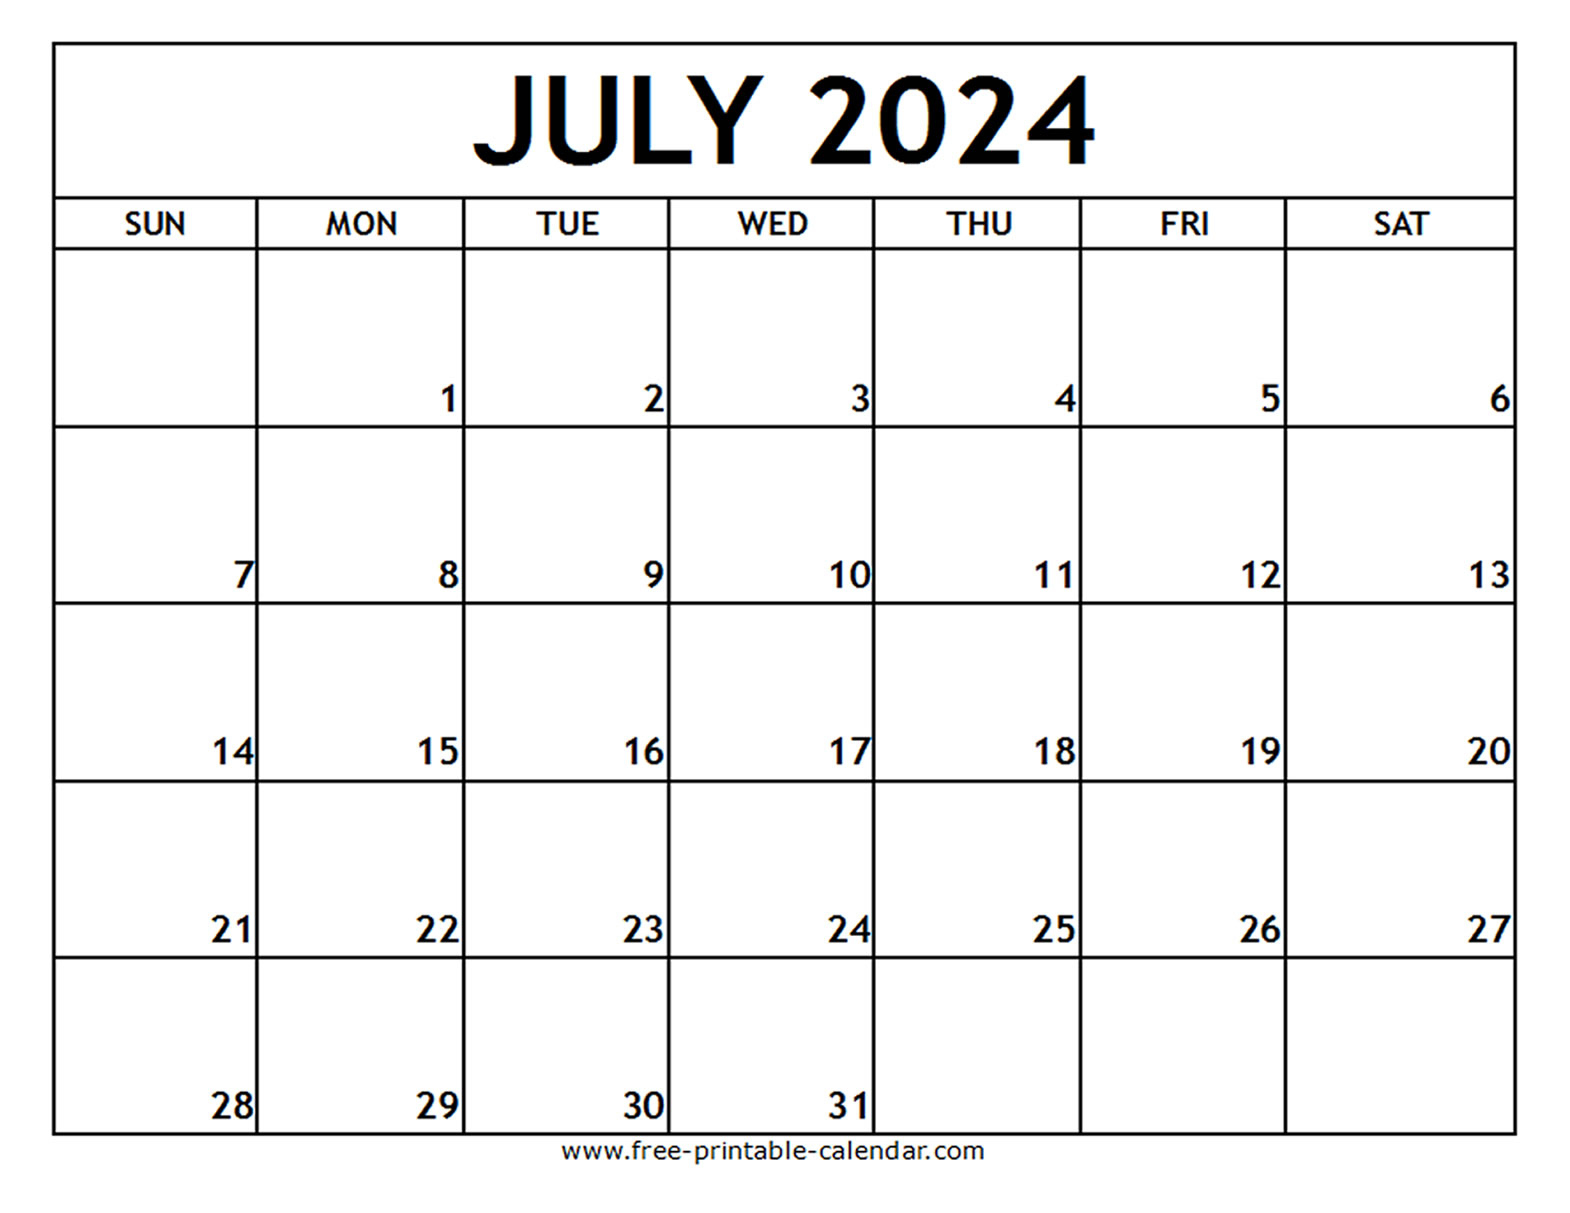 July 2024 Printable Calendar - Free-Printable-Calendar | Calendar Print July 2024